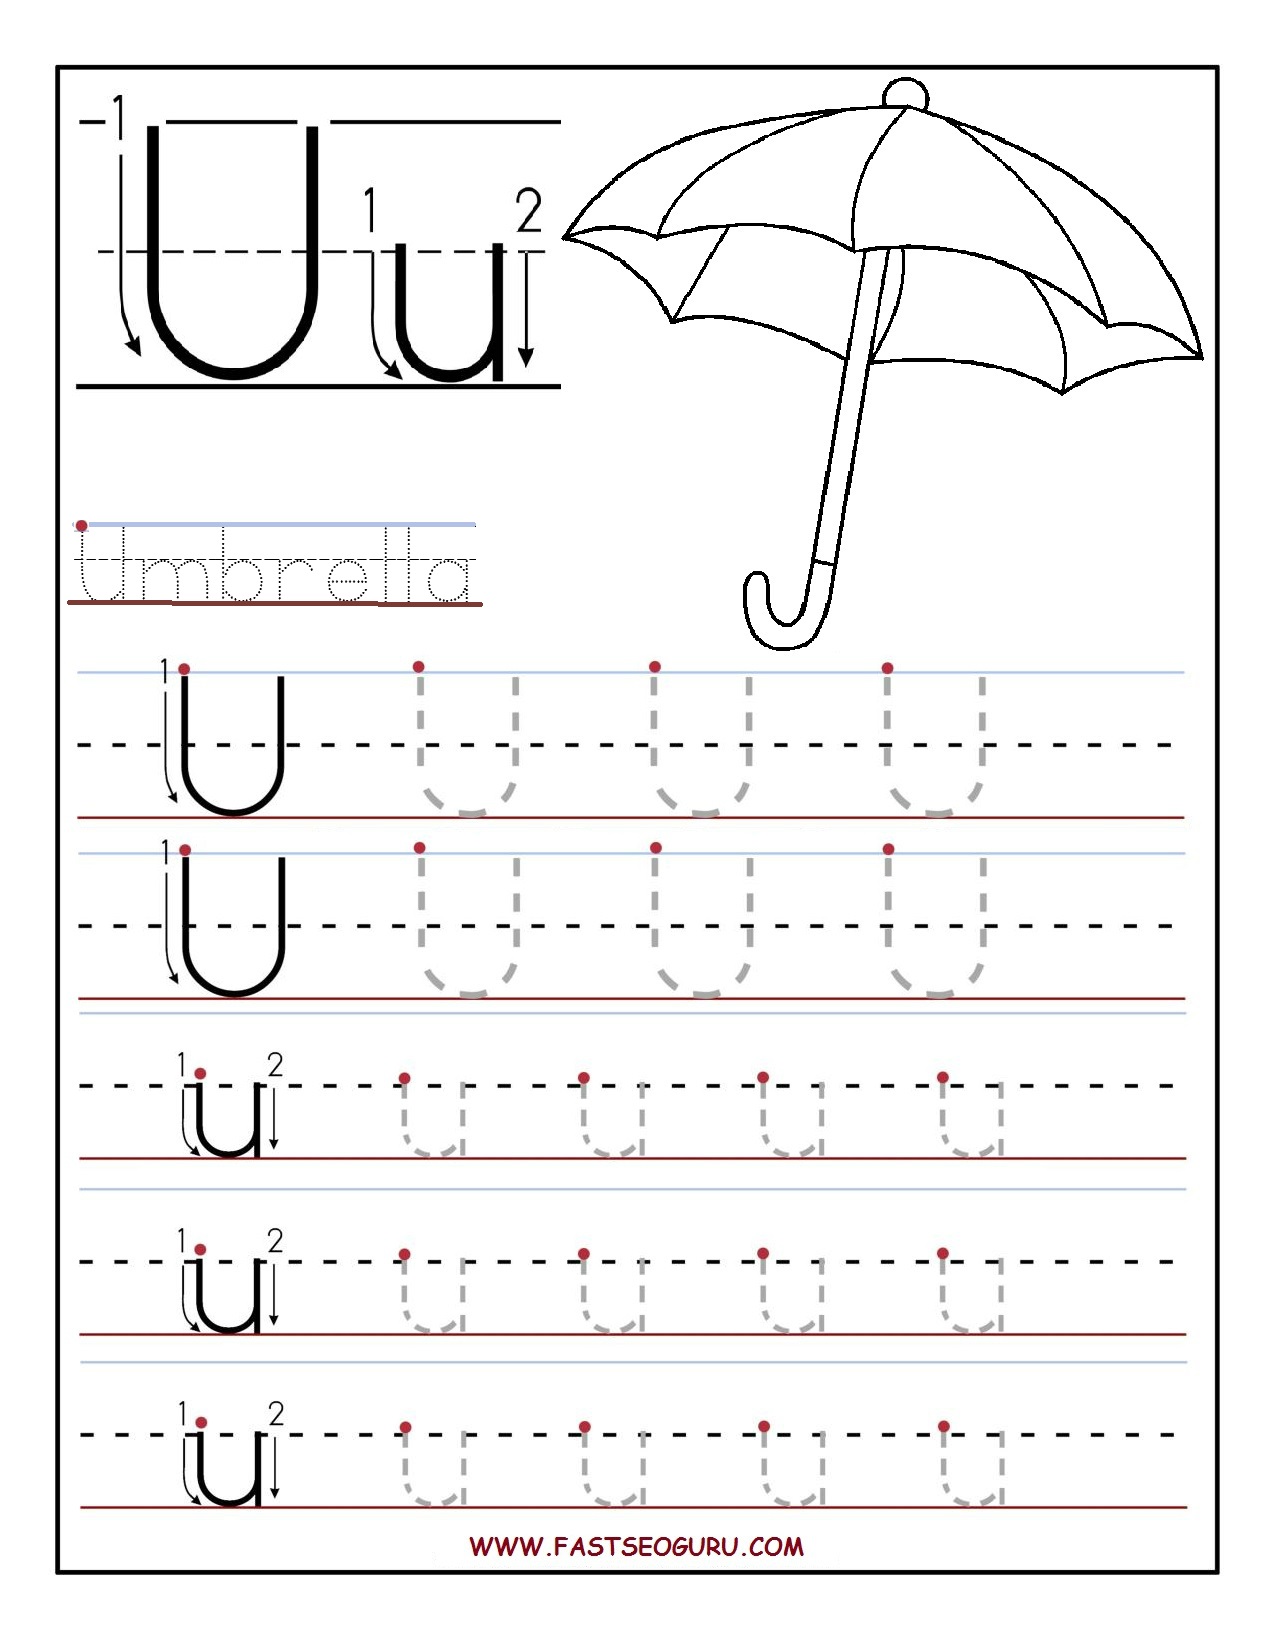 Printable letter U tracing worksheets for preschool